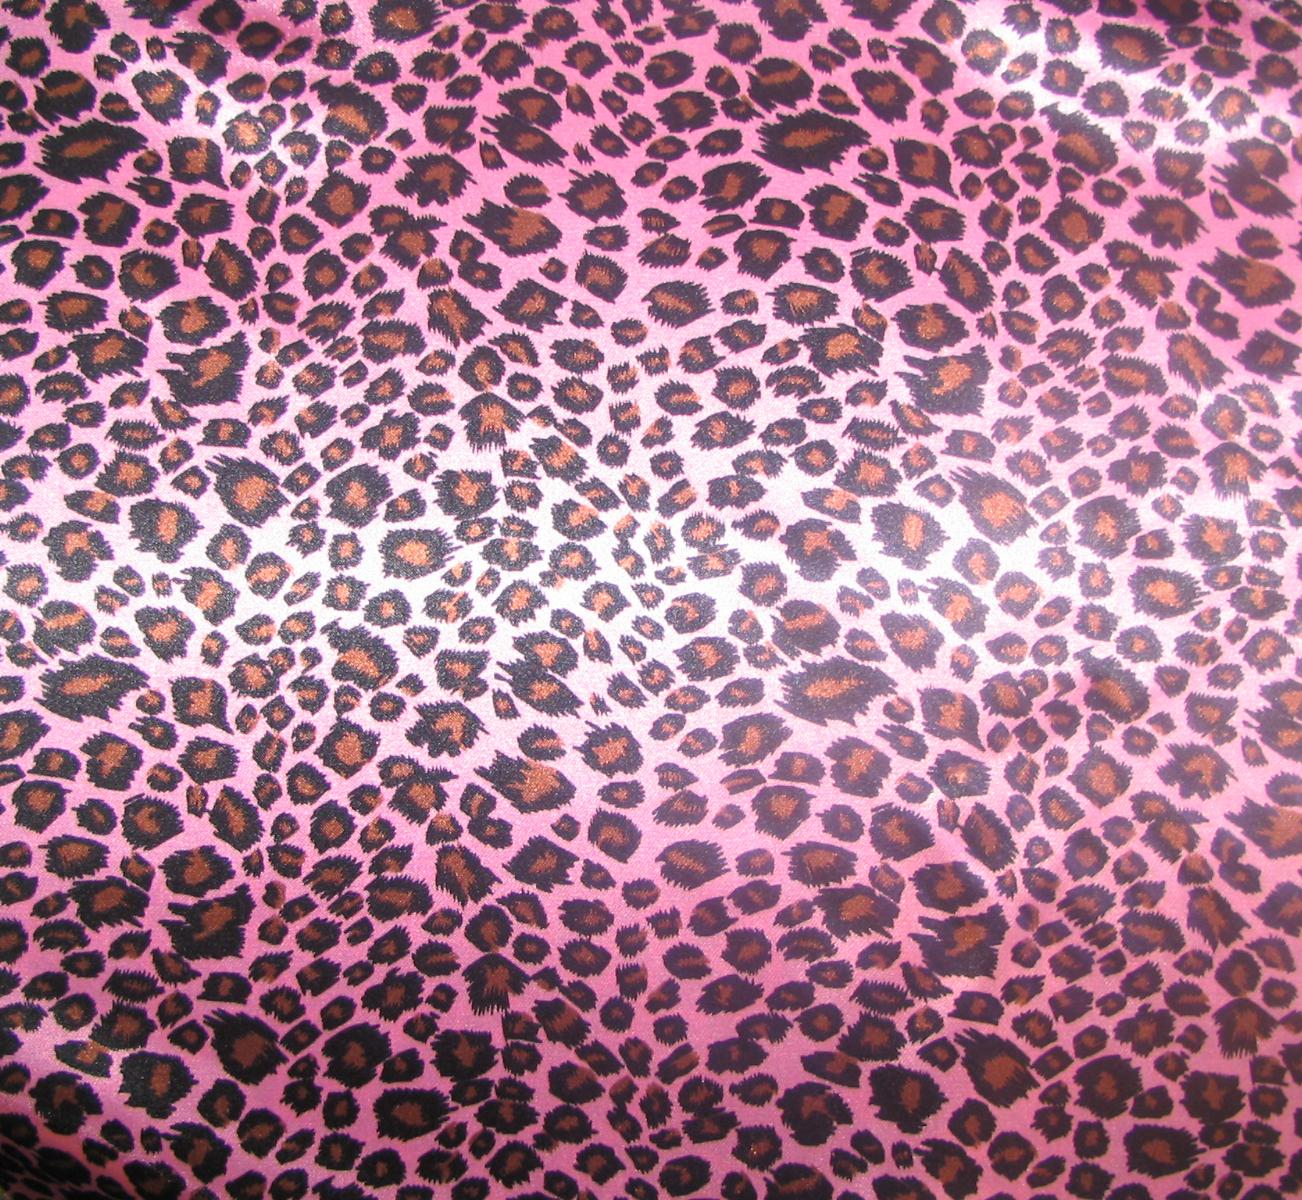 Leopard Backgrounds wallpaper Pink Leopard Backgrounds hd wallpaper